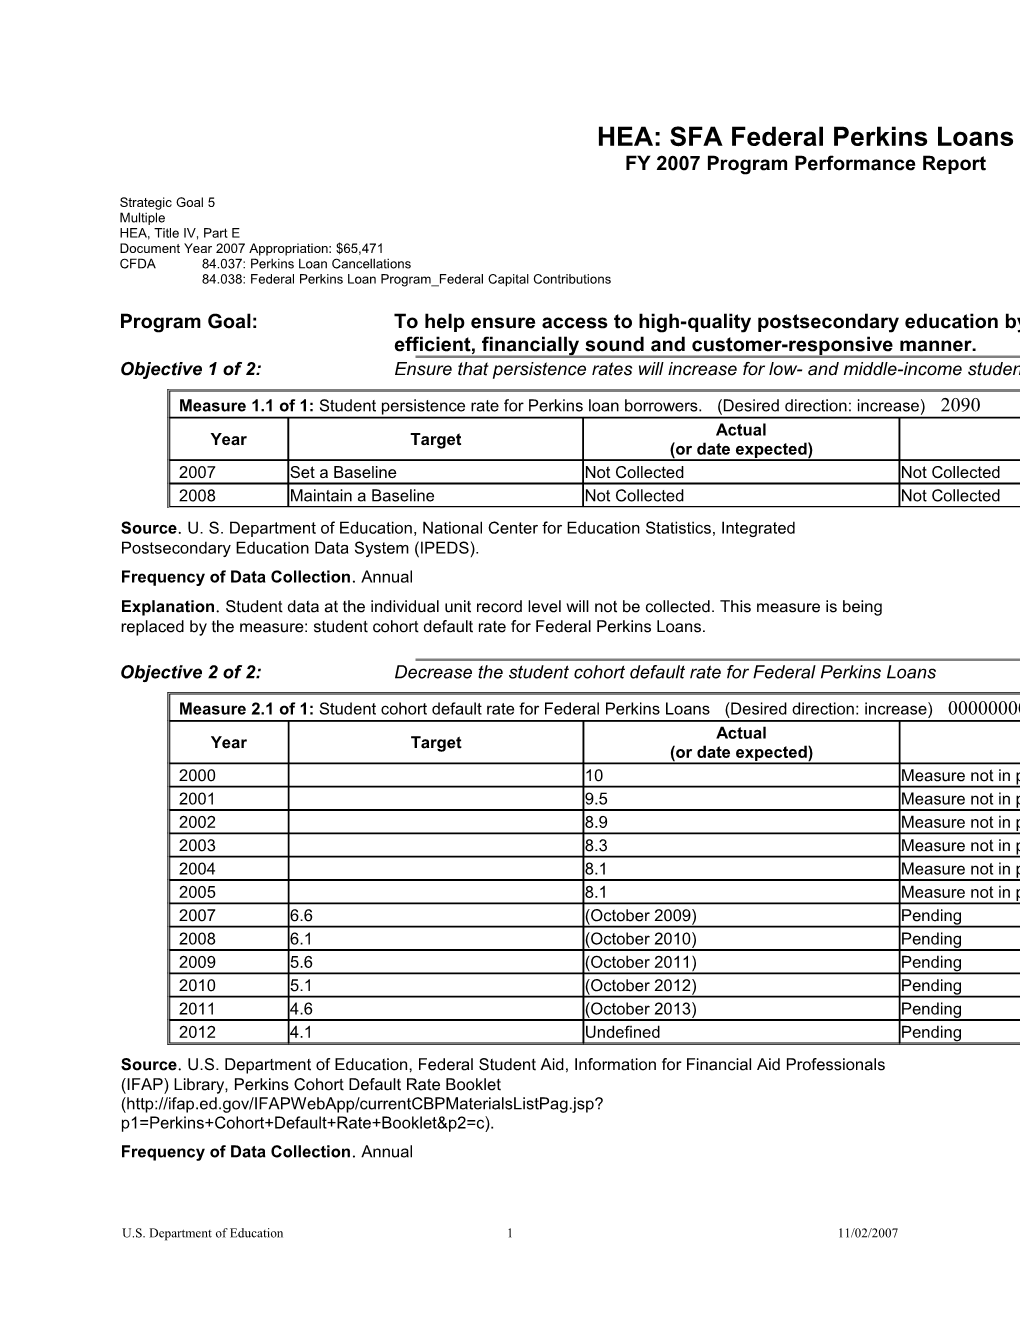 Federal Perkins Loans FY 2007 Program Performance Report (MS Word)